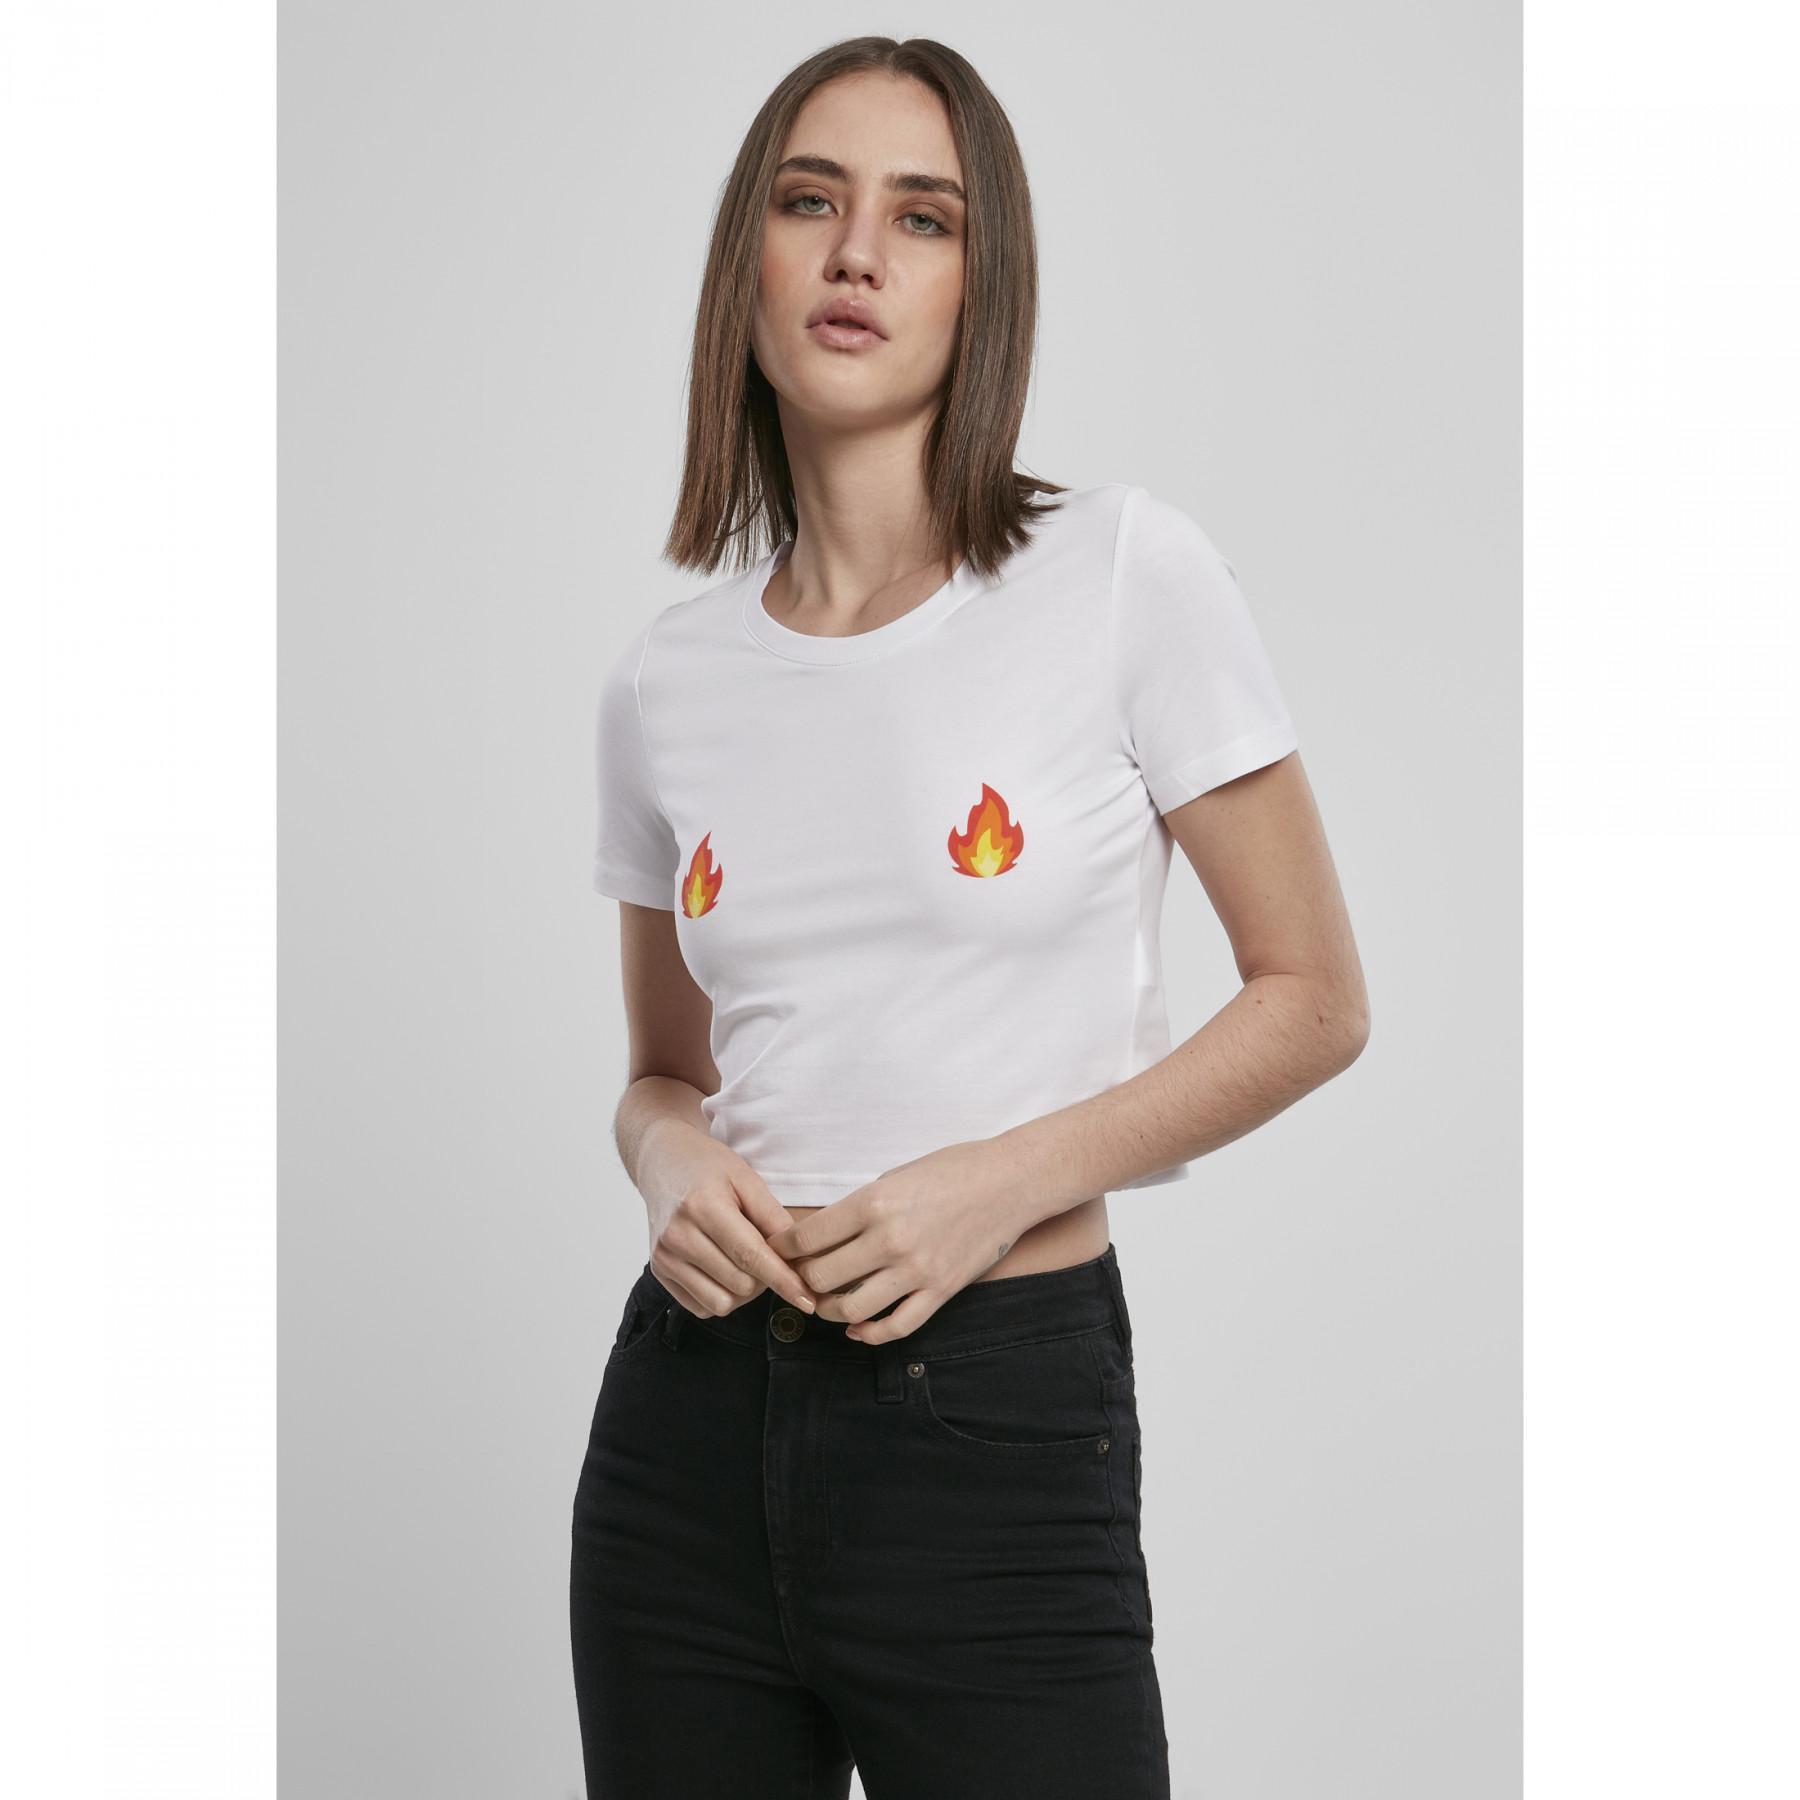 T-shirt donna Mister Tee flames